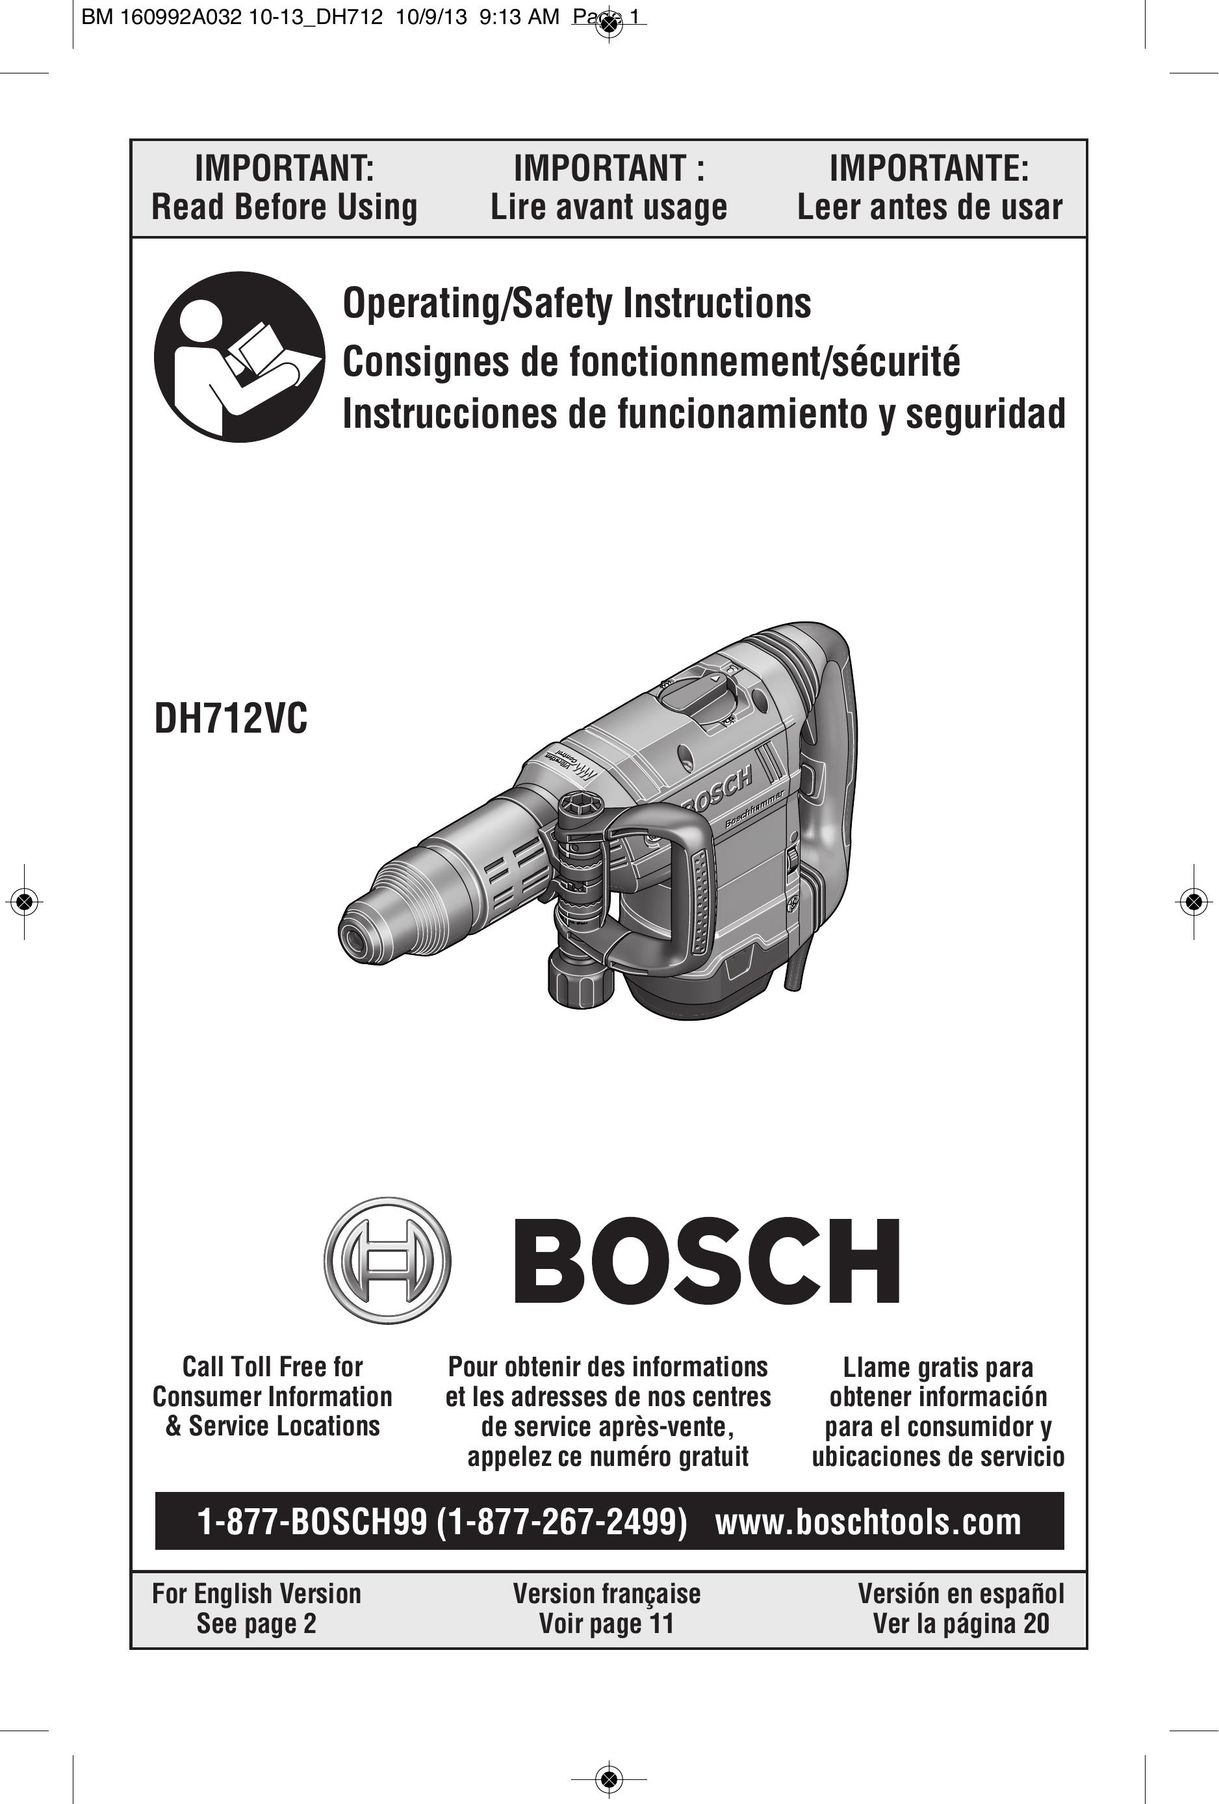 Bosch Power Tools DH712VC Power Hammer User Manual